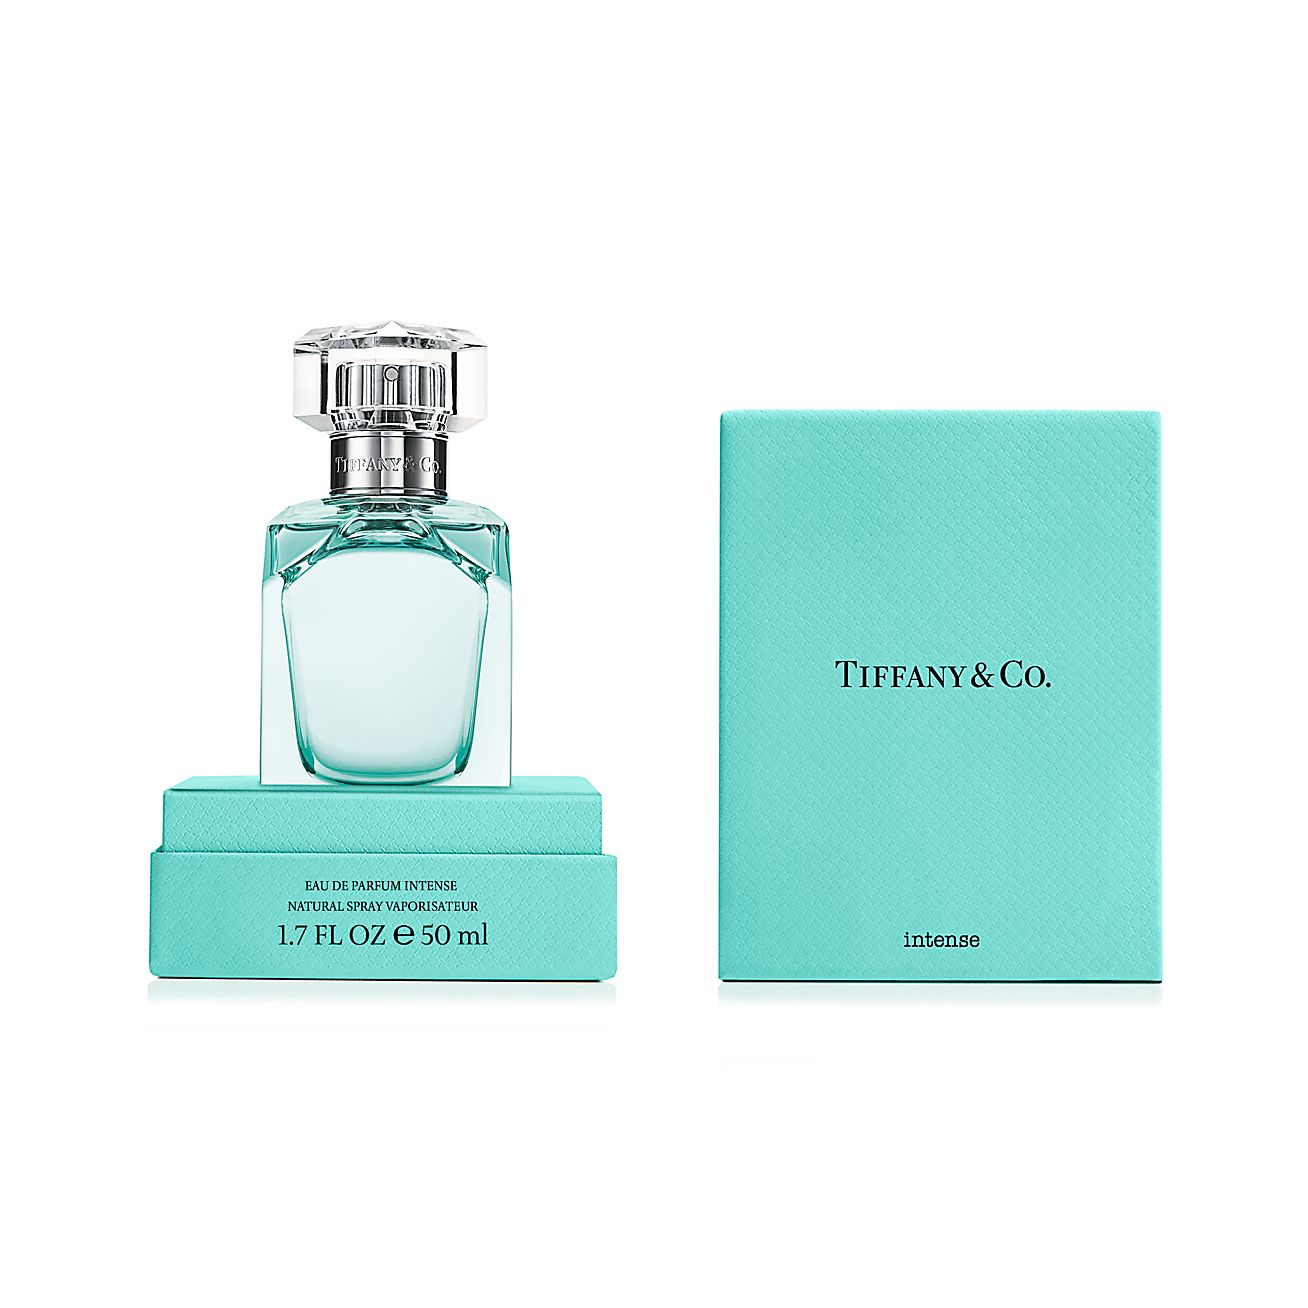 tiffany perfume intense price